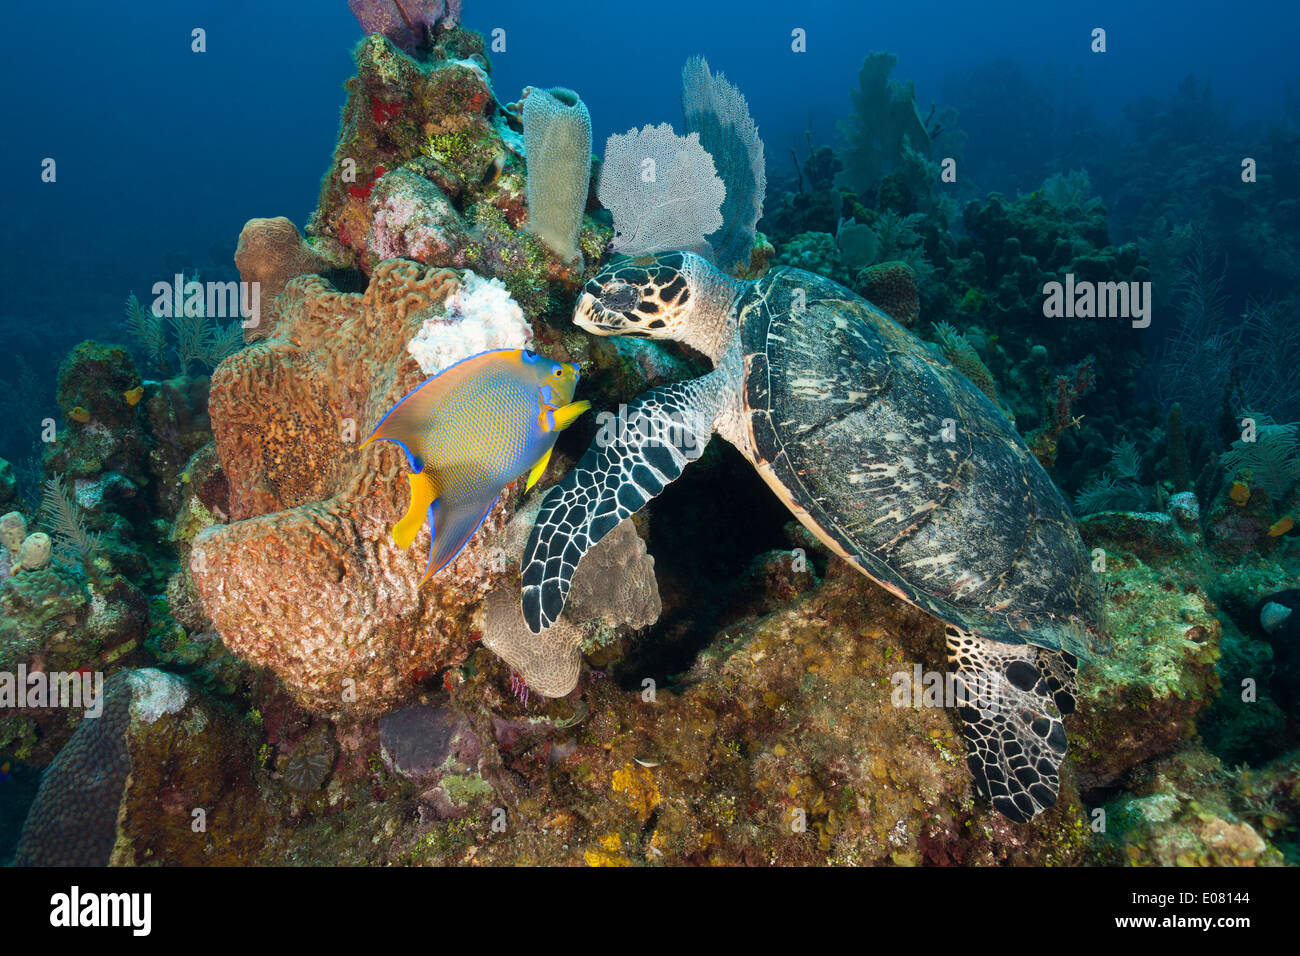 Atlantic Hawksbill Turtle (Eretmochelys imbricata imbricata) feeding on a Leathery Barrel Sponge (Geodia neptuni) Stock Photo